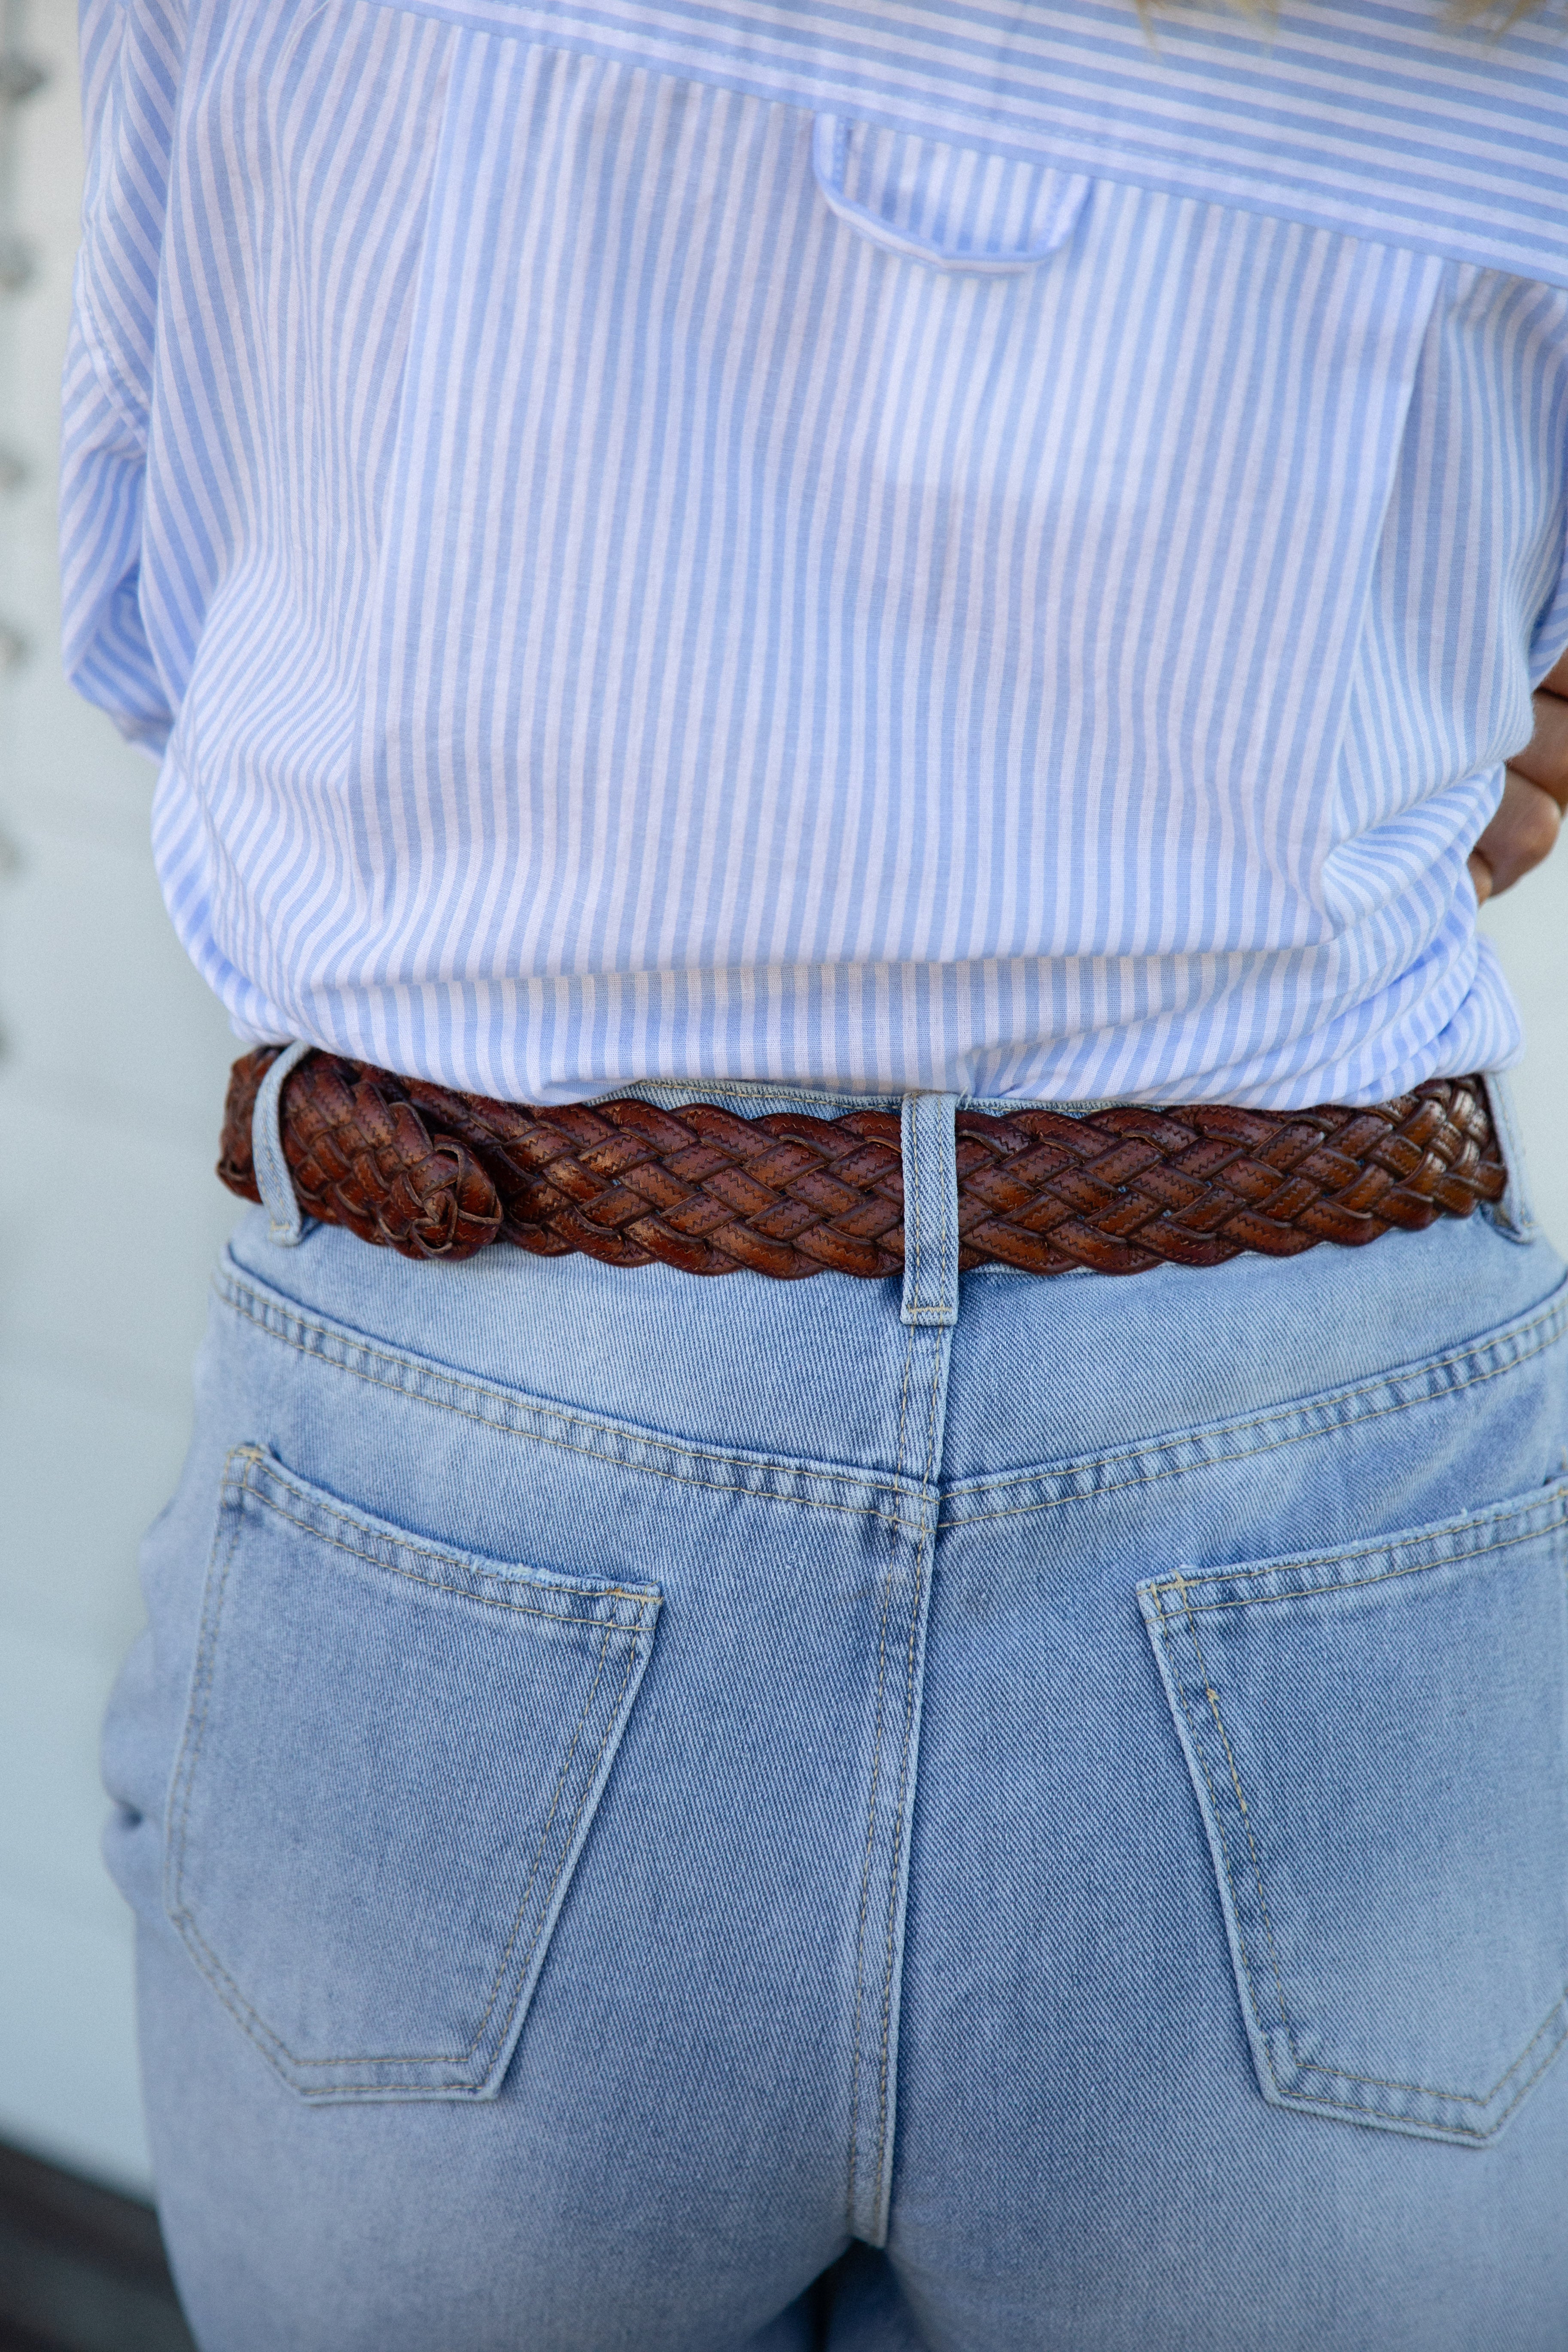 Vintage Woven Belt - Antique Brown